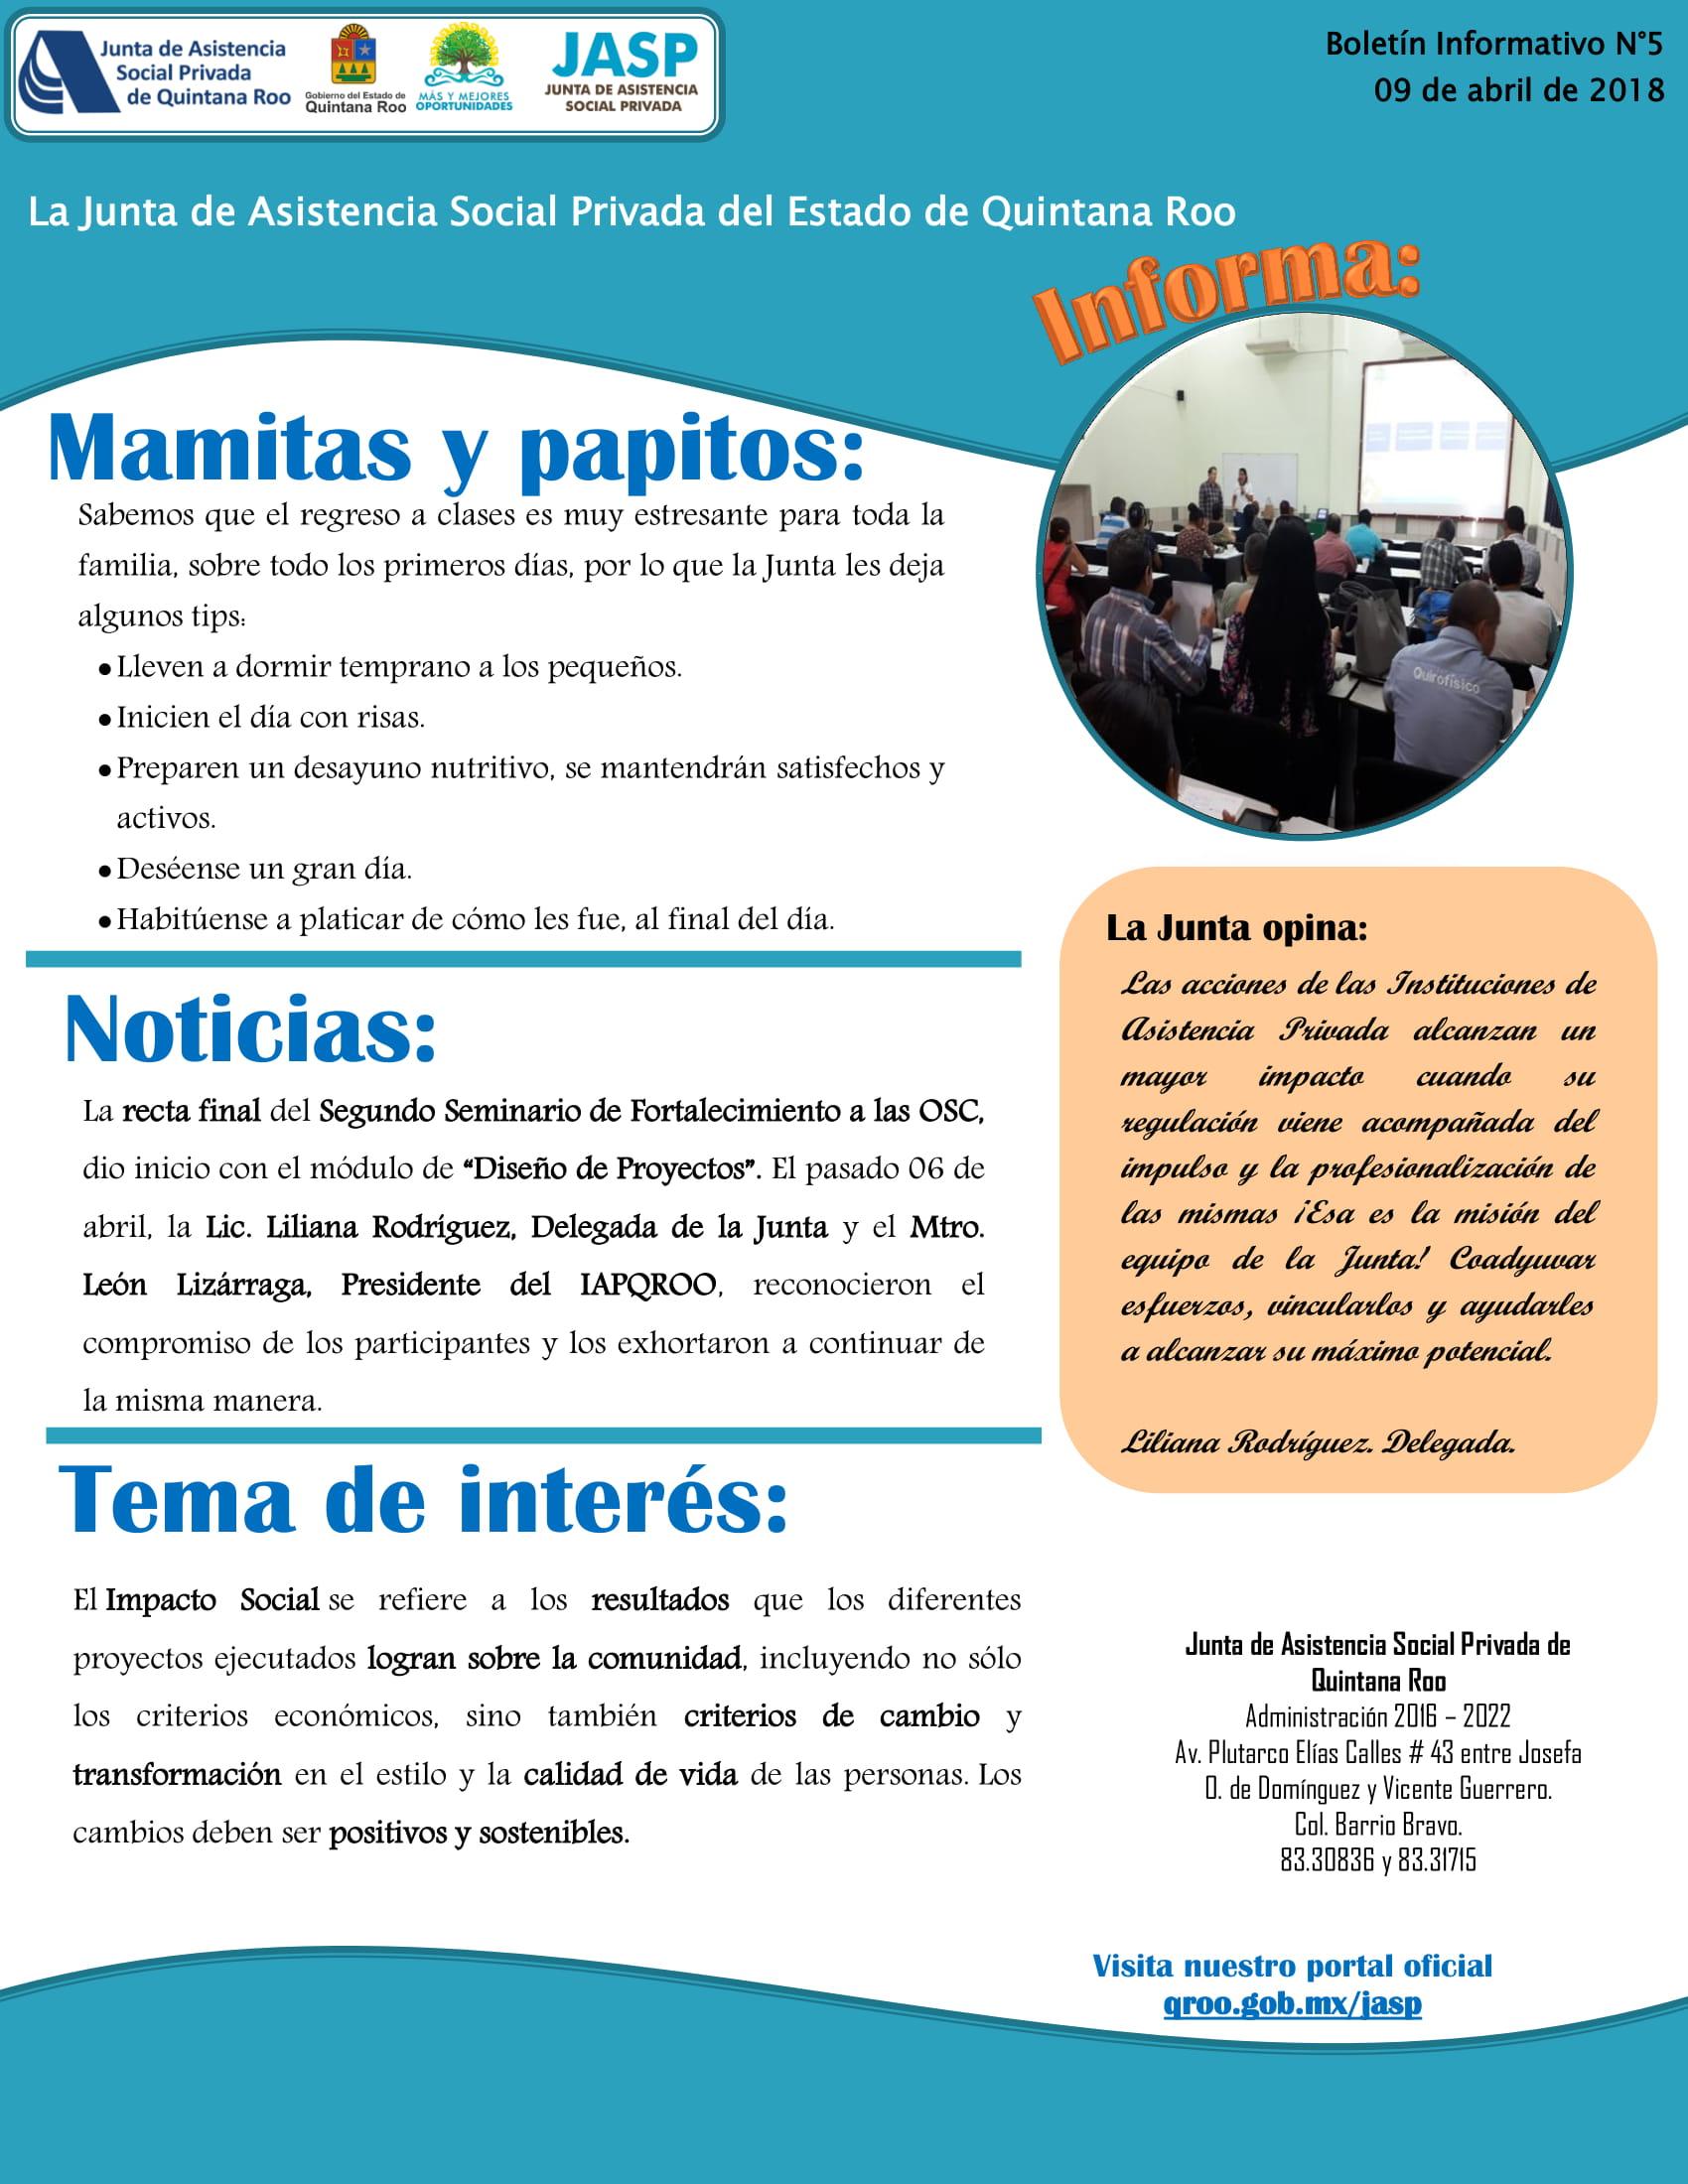 Boletín informativo 5 - Junta de asistencia social privada de Quintana Roo